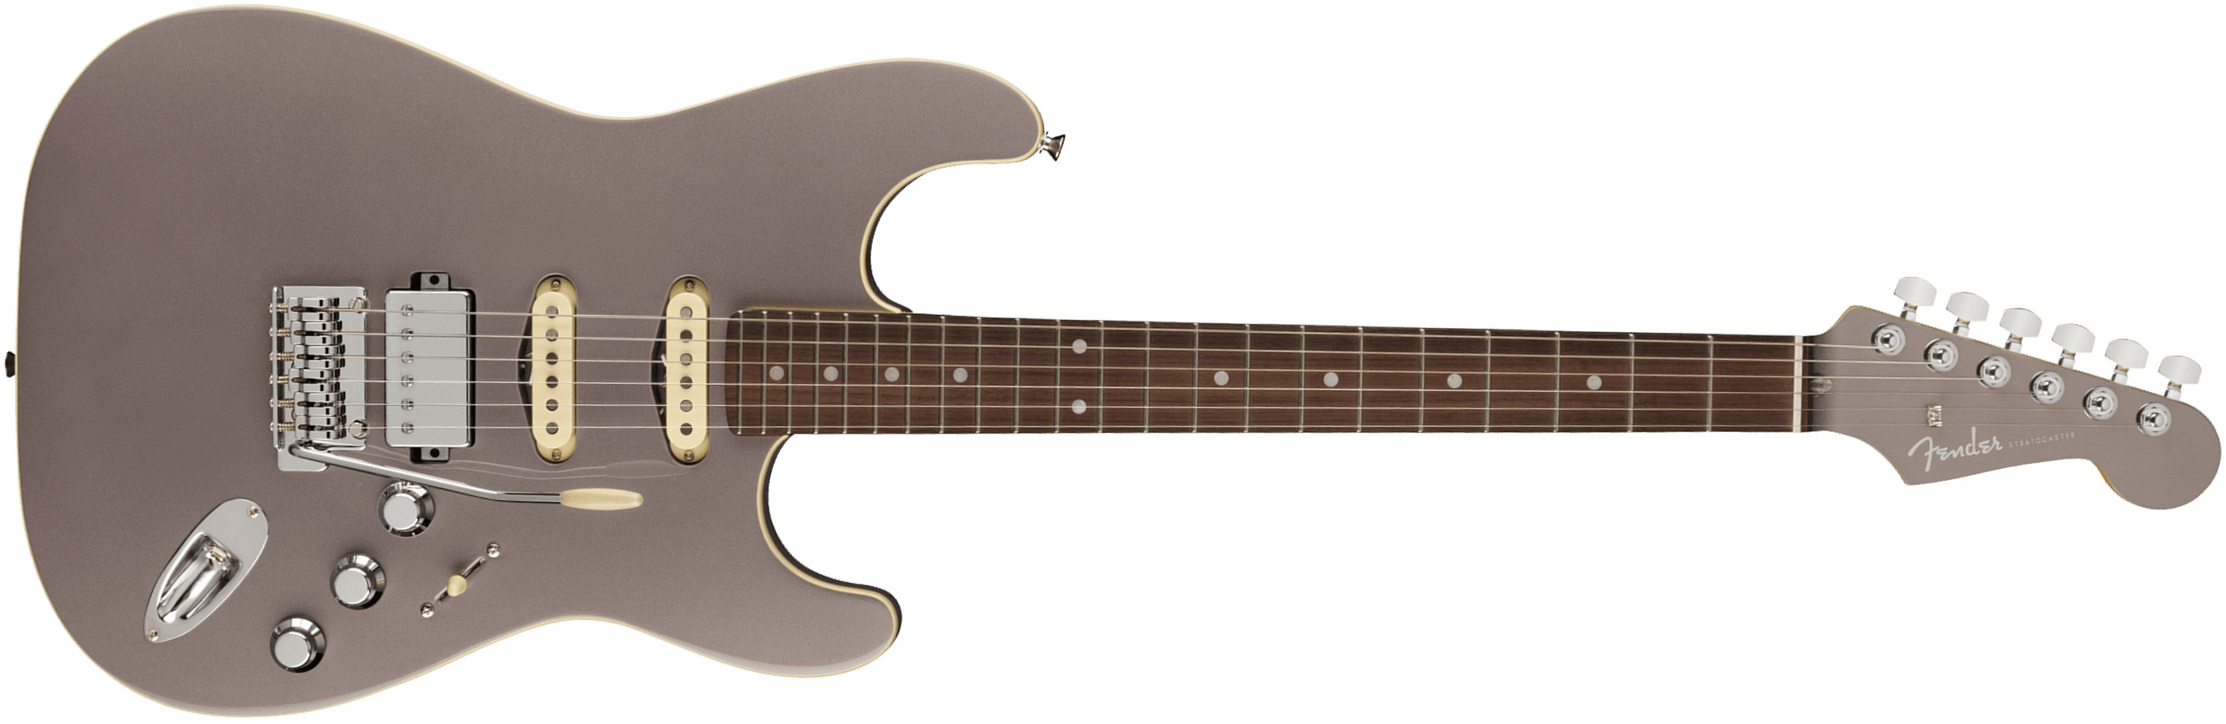 Fender Strat Aerodyne Special Jap Trem Hss Rw - Dolphin Gray Metallic - Guitarra eléctrica con forma de str. - Main picture